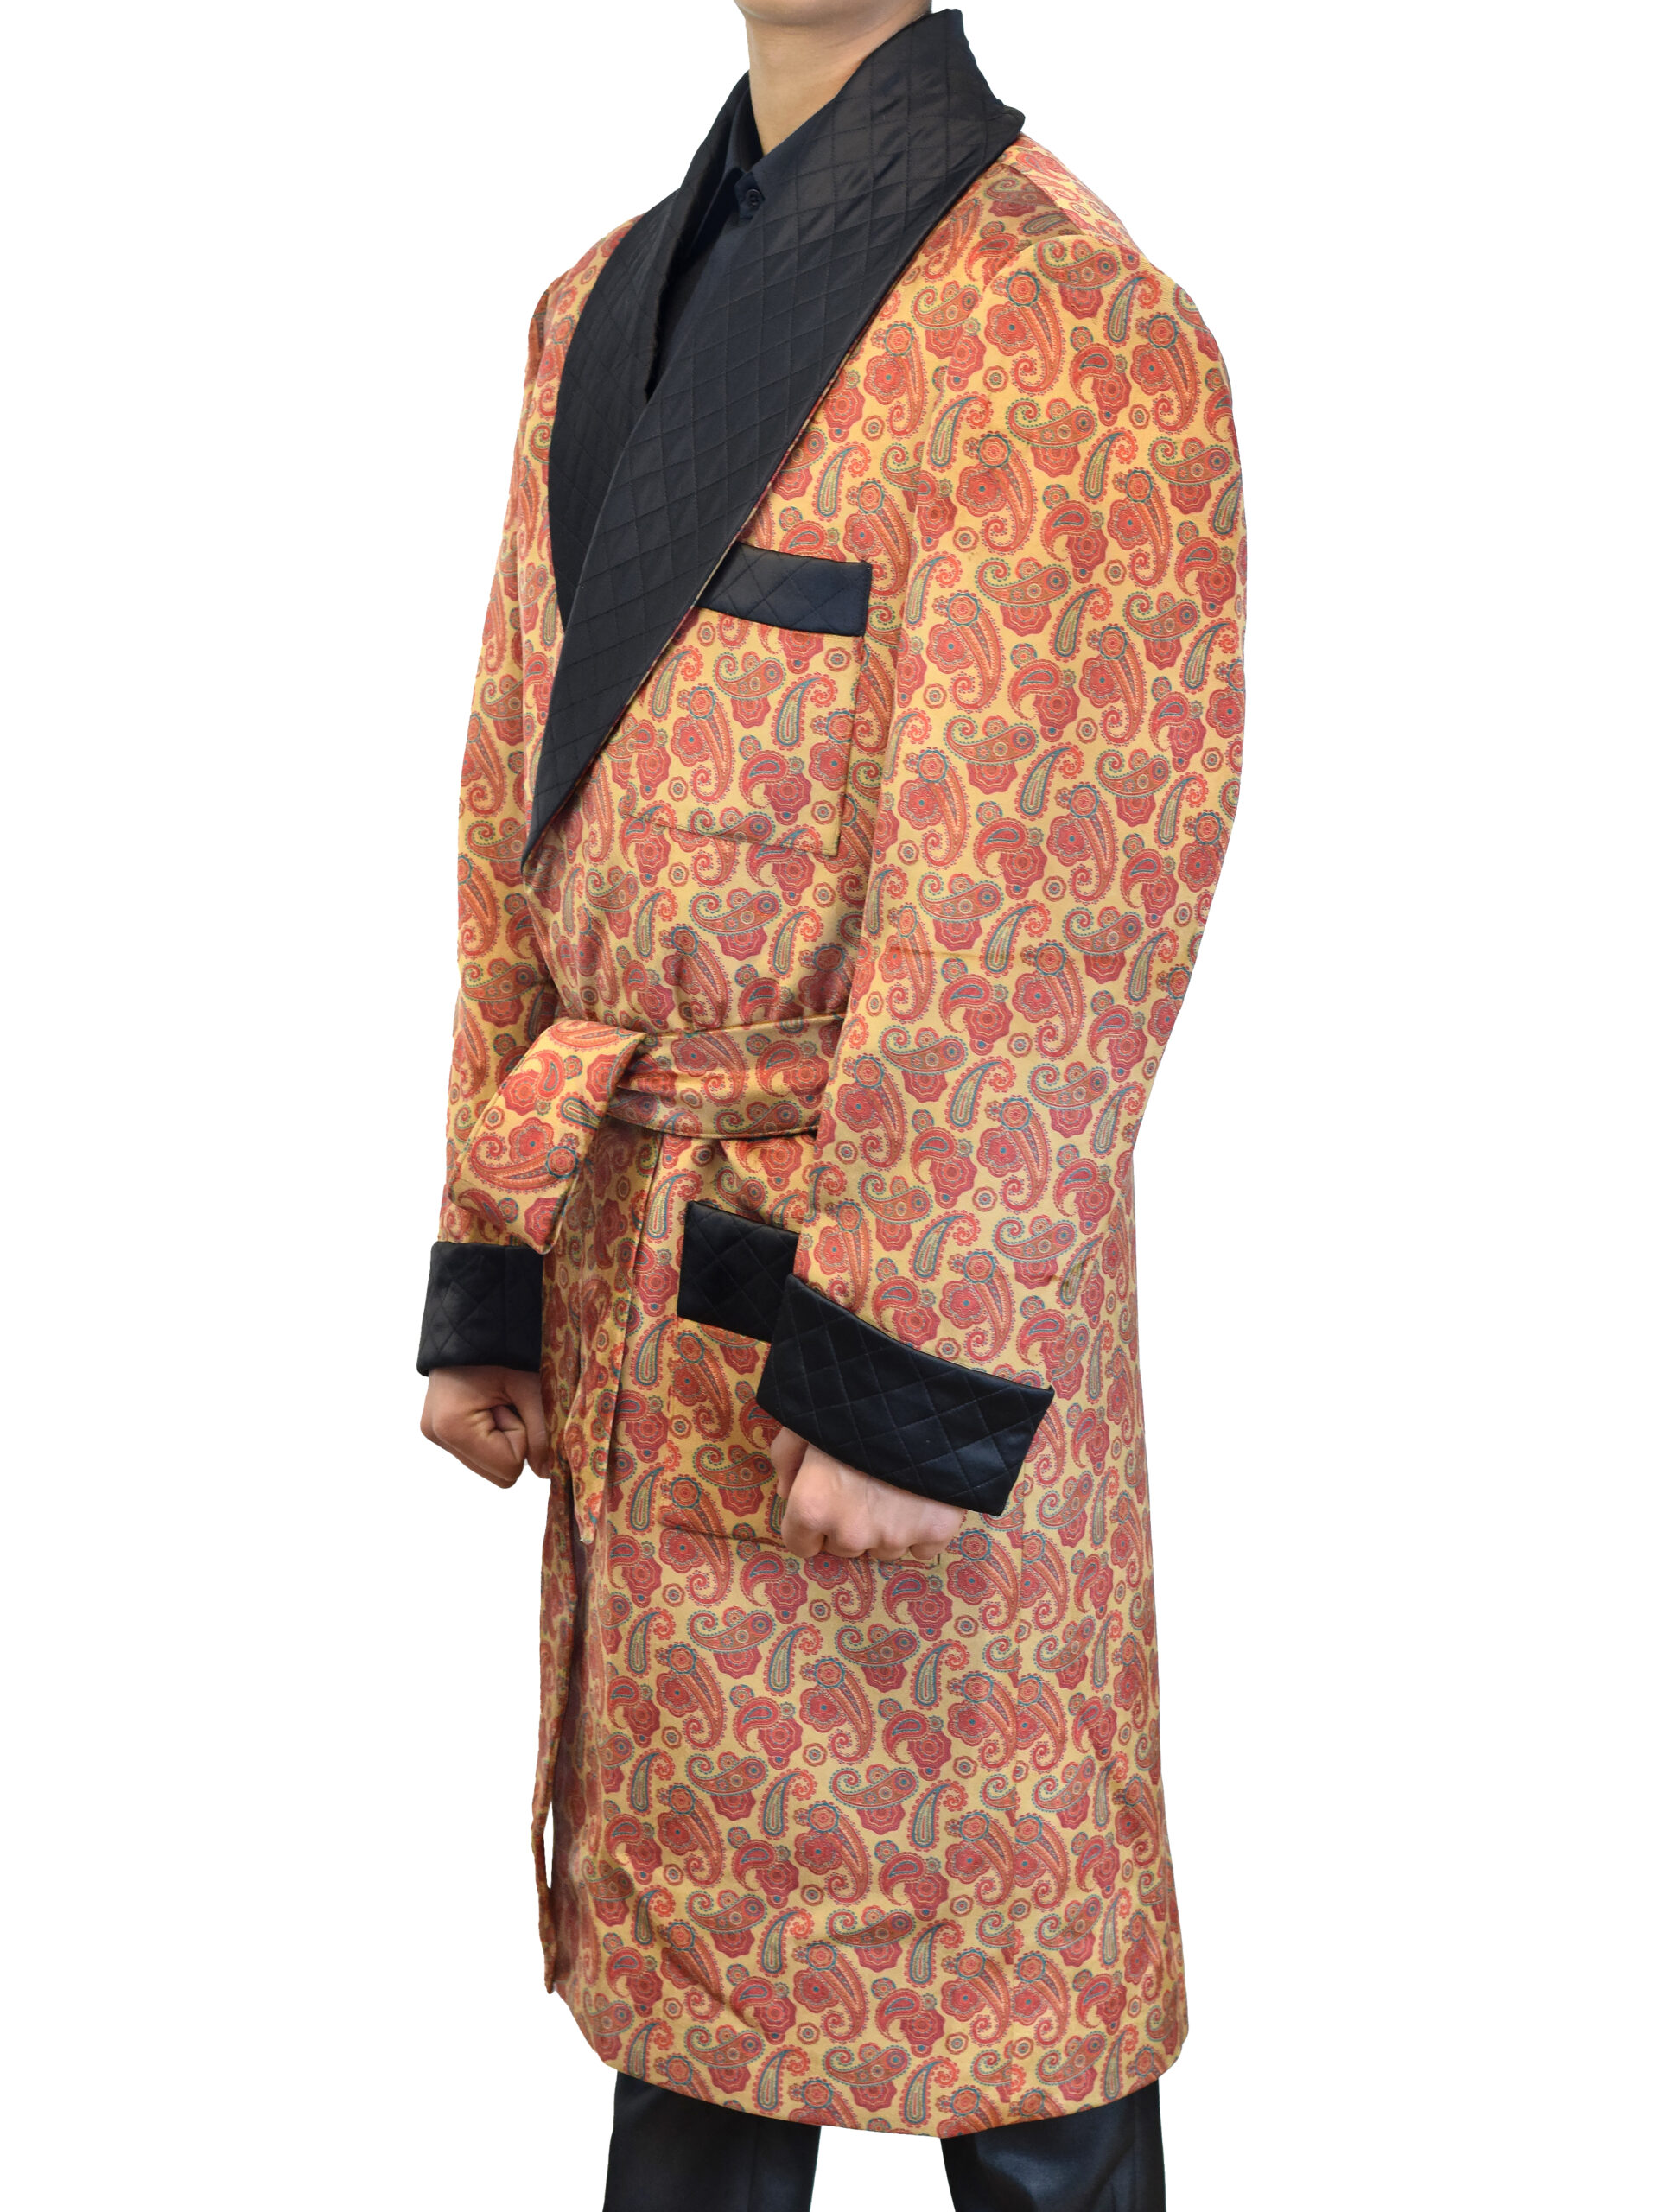 Velvet Quilted Robe for Men Vintage Smoking Dressing Gown Long